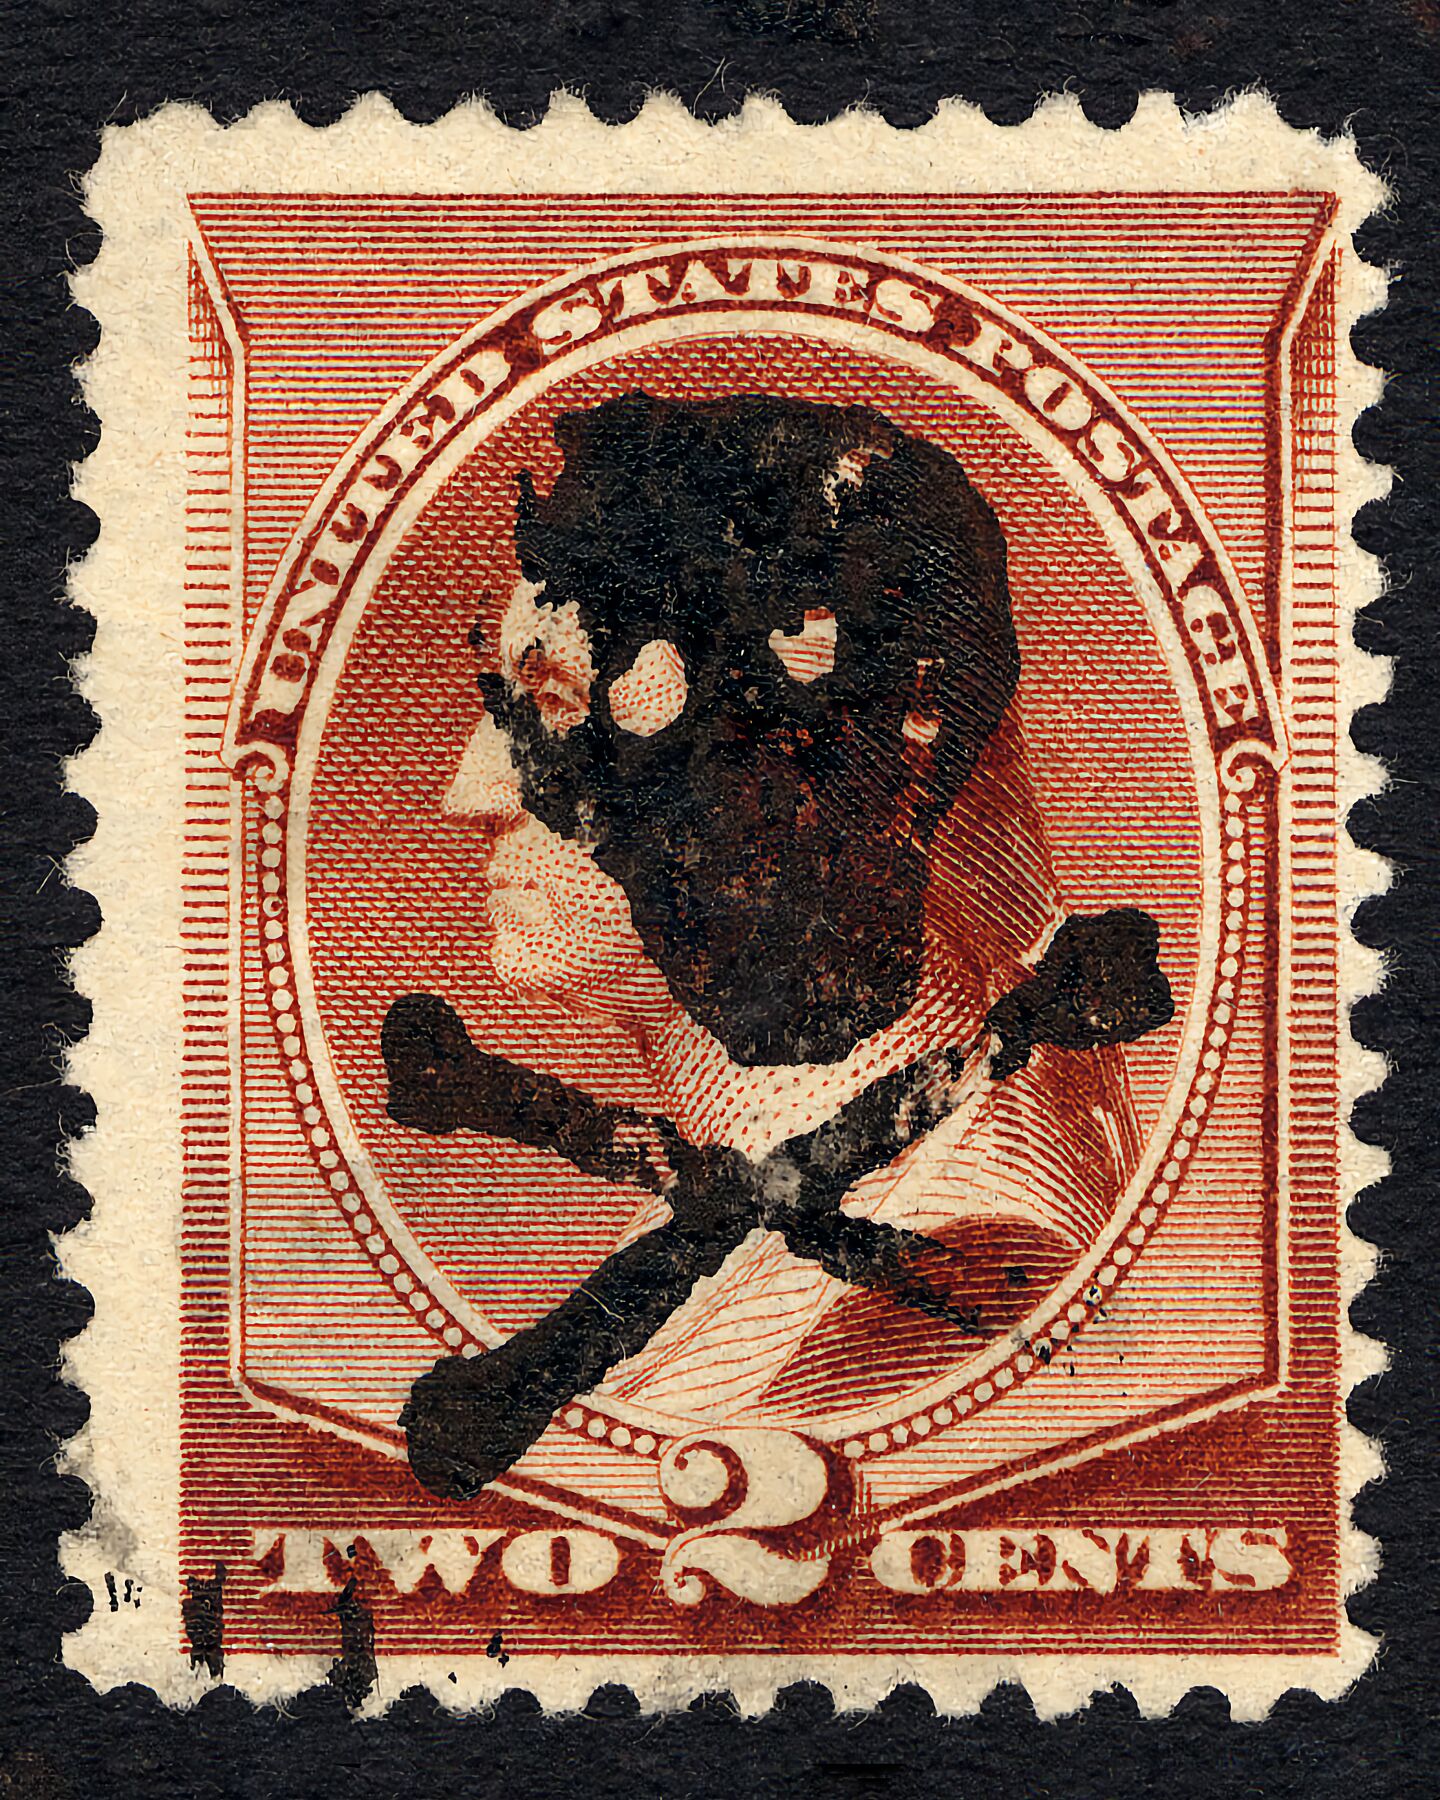 2c Washington stamp with skull and crossbones single c.1883